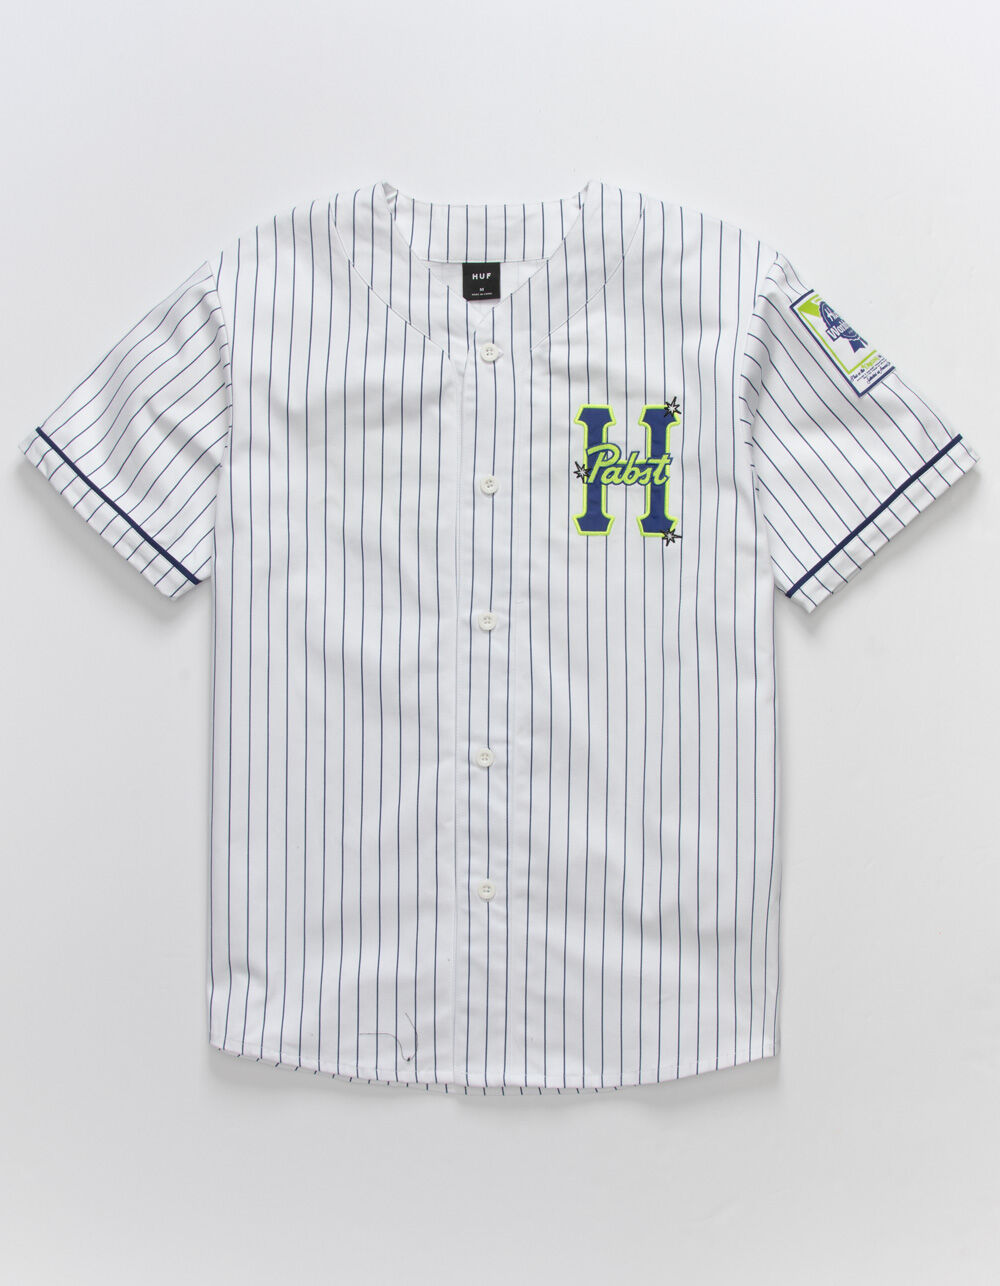 HUF x PBR Mens Baseball Jersey - WHITE